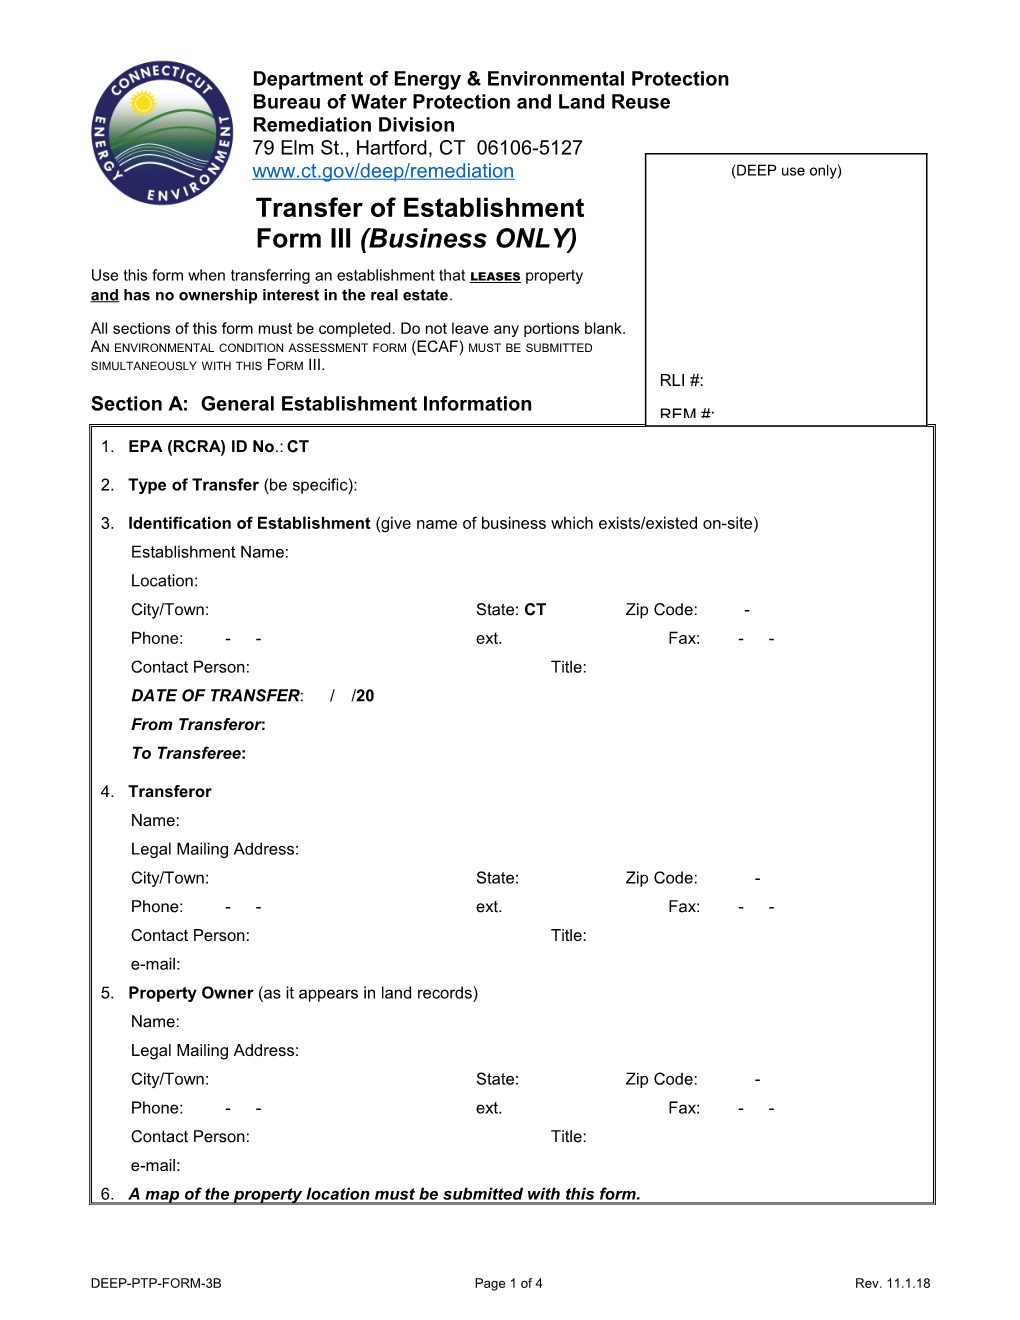 Transfer of Establishment - Form II (Real Estate)